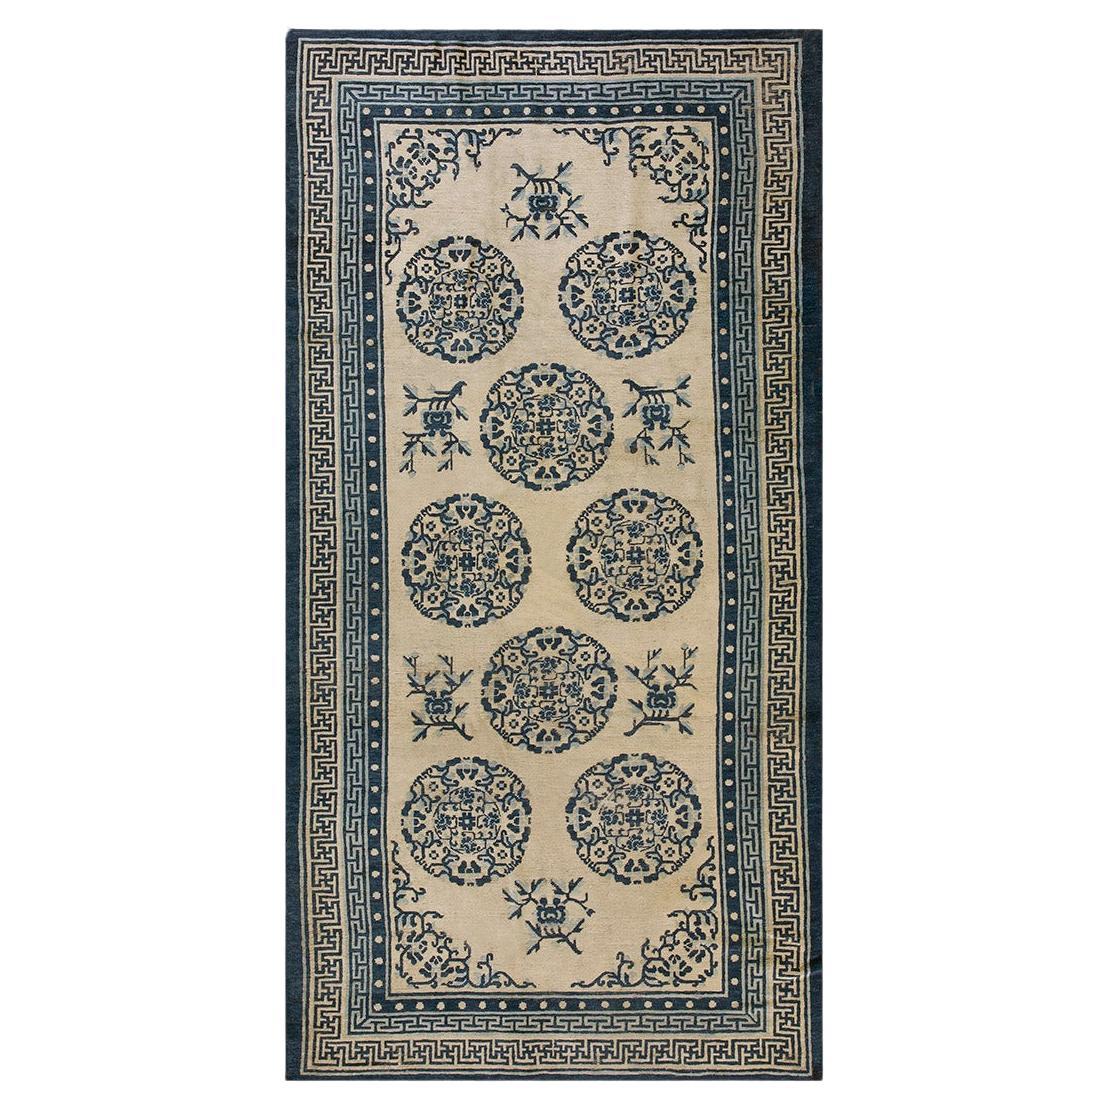 Mid-19th Century Chinese Ningxia Carpet ( 5'2" x 10'2" - 157 x 310 )